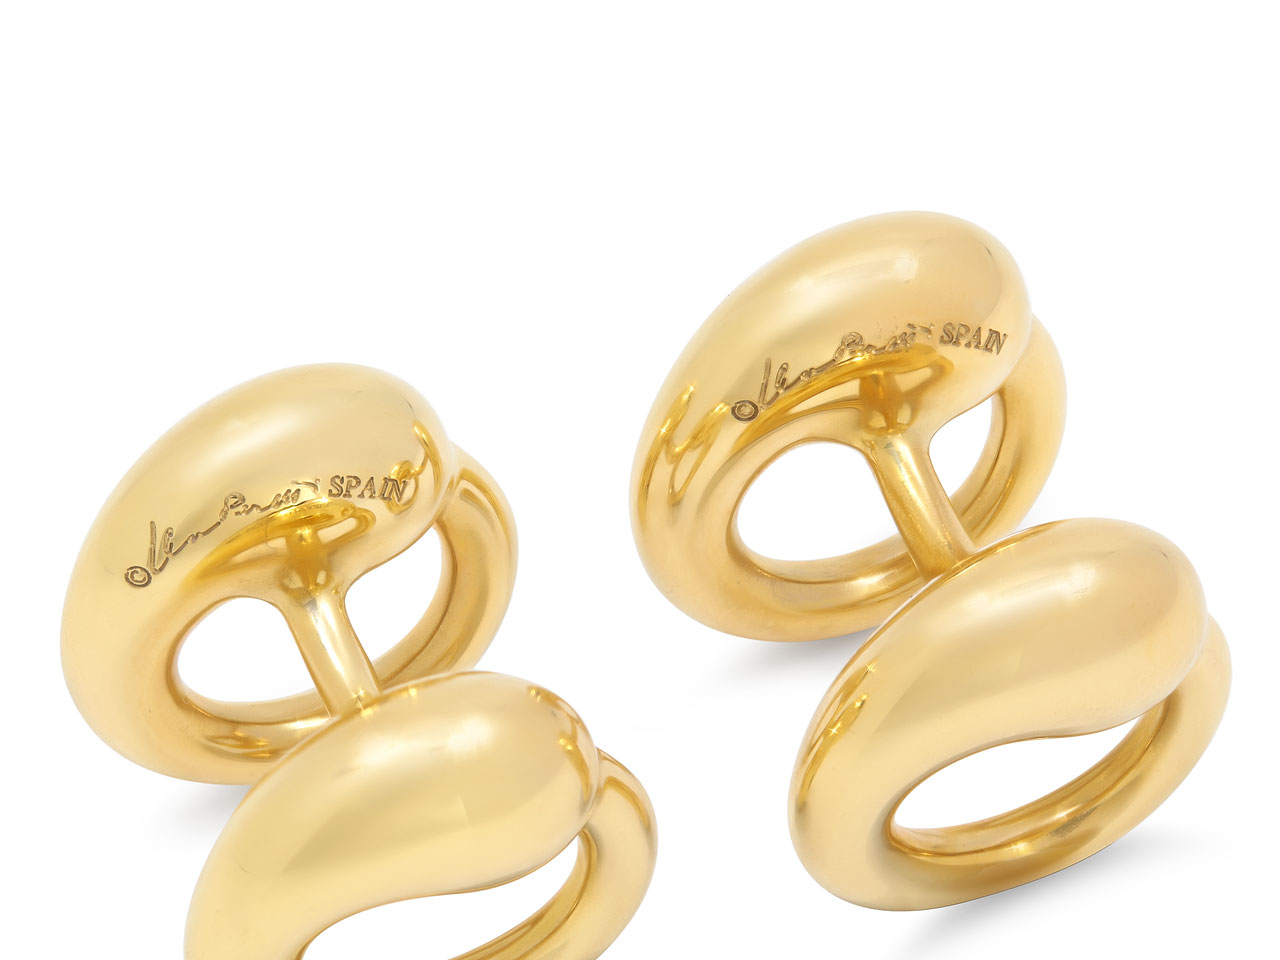 Tiffany & Co. Elsa Peretti 'Eternal Circle' Cufflinks in 18K Gold